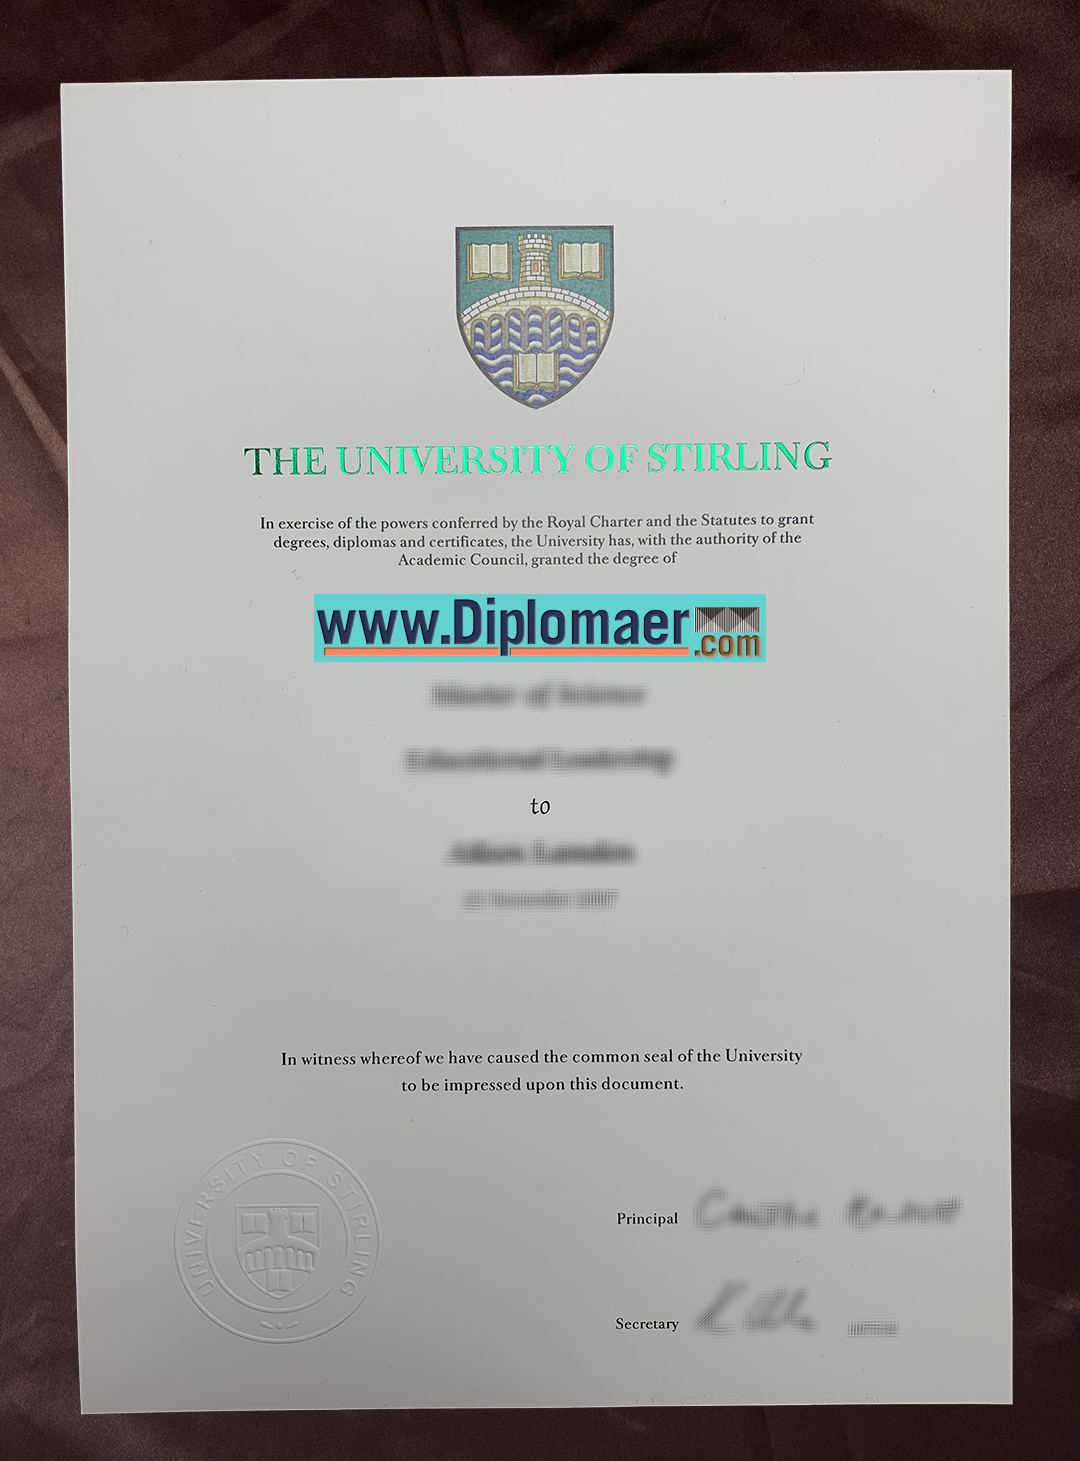 the University of Stirling fake diploma - Getting a fake University of Stirling degree can help your job